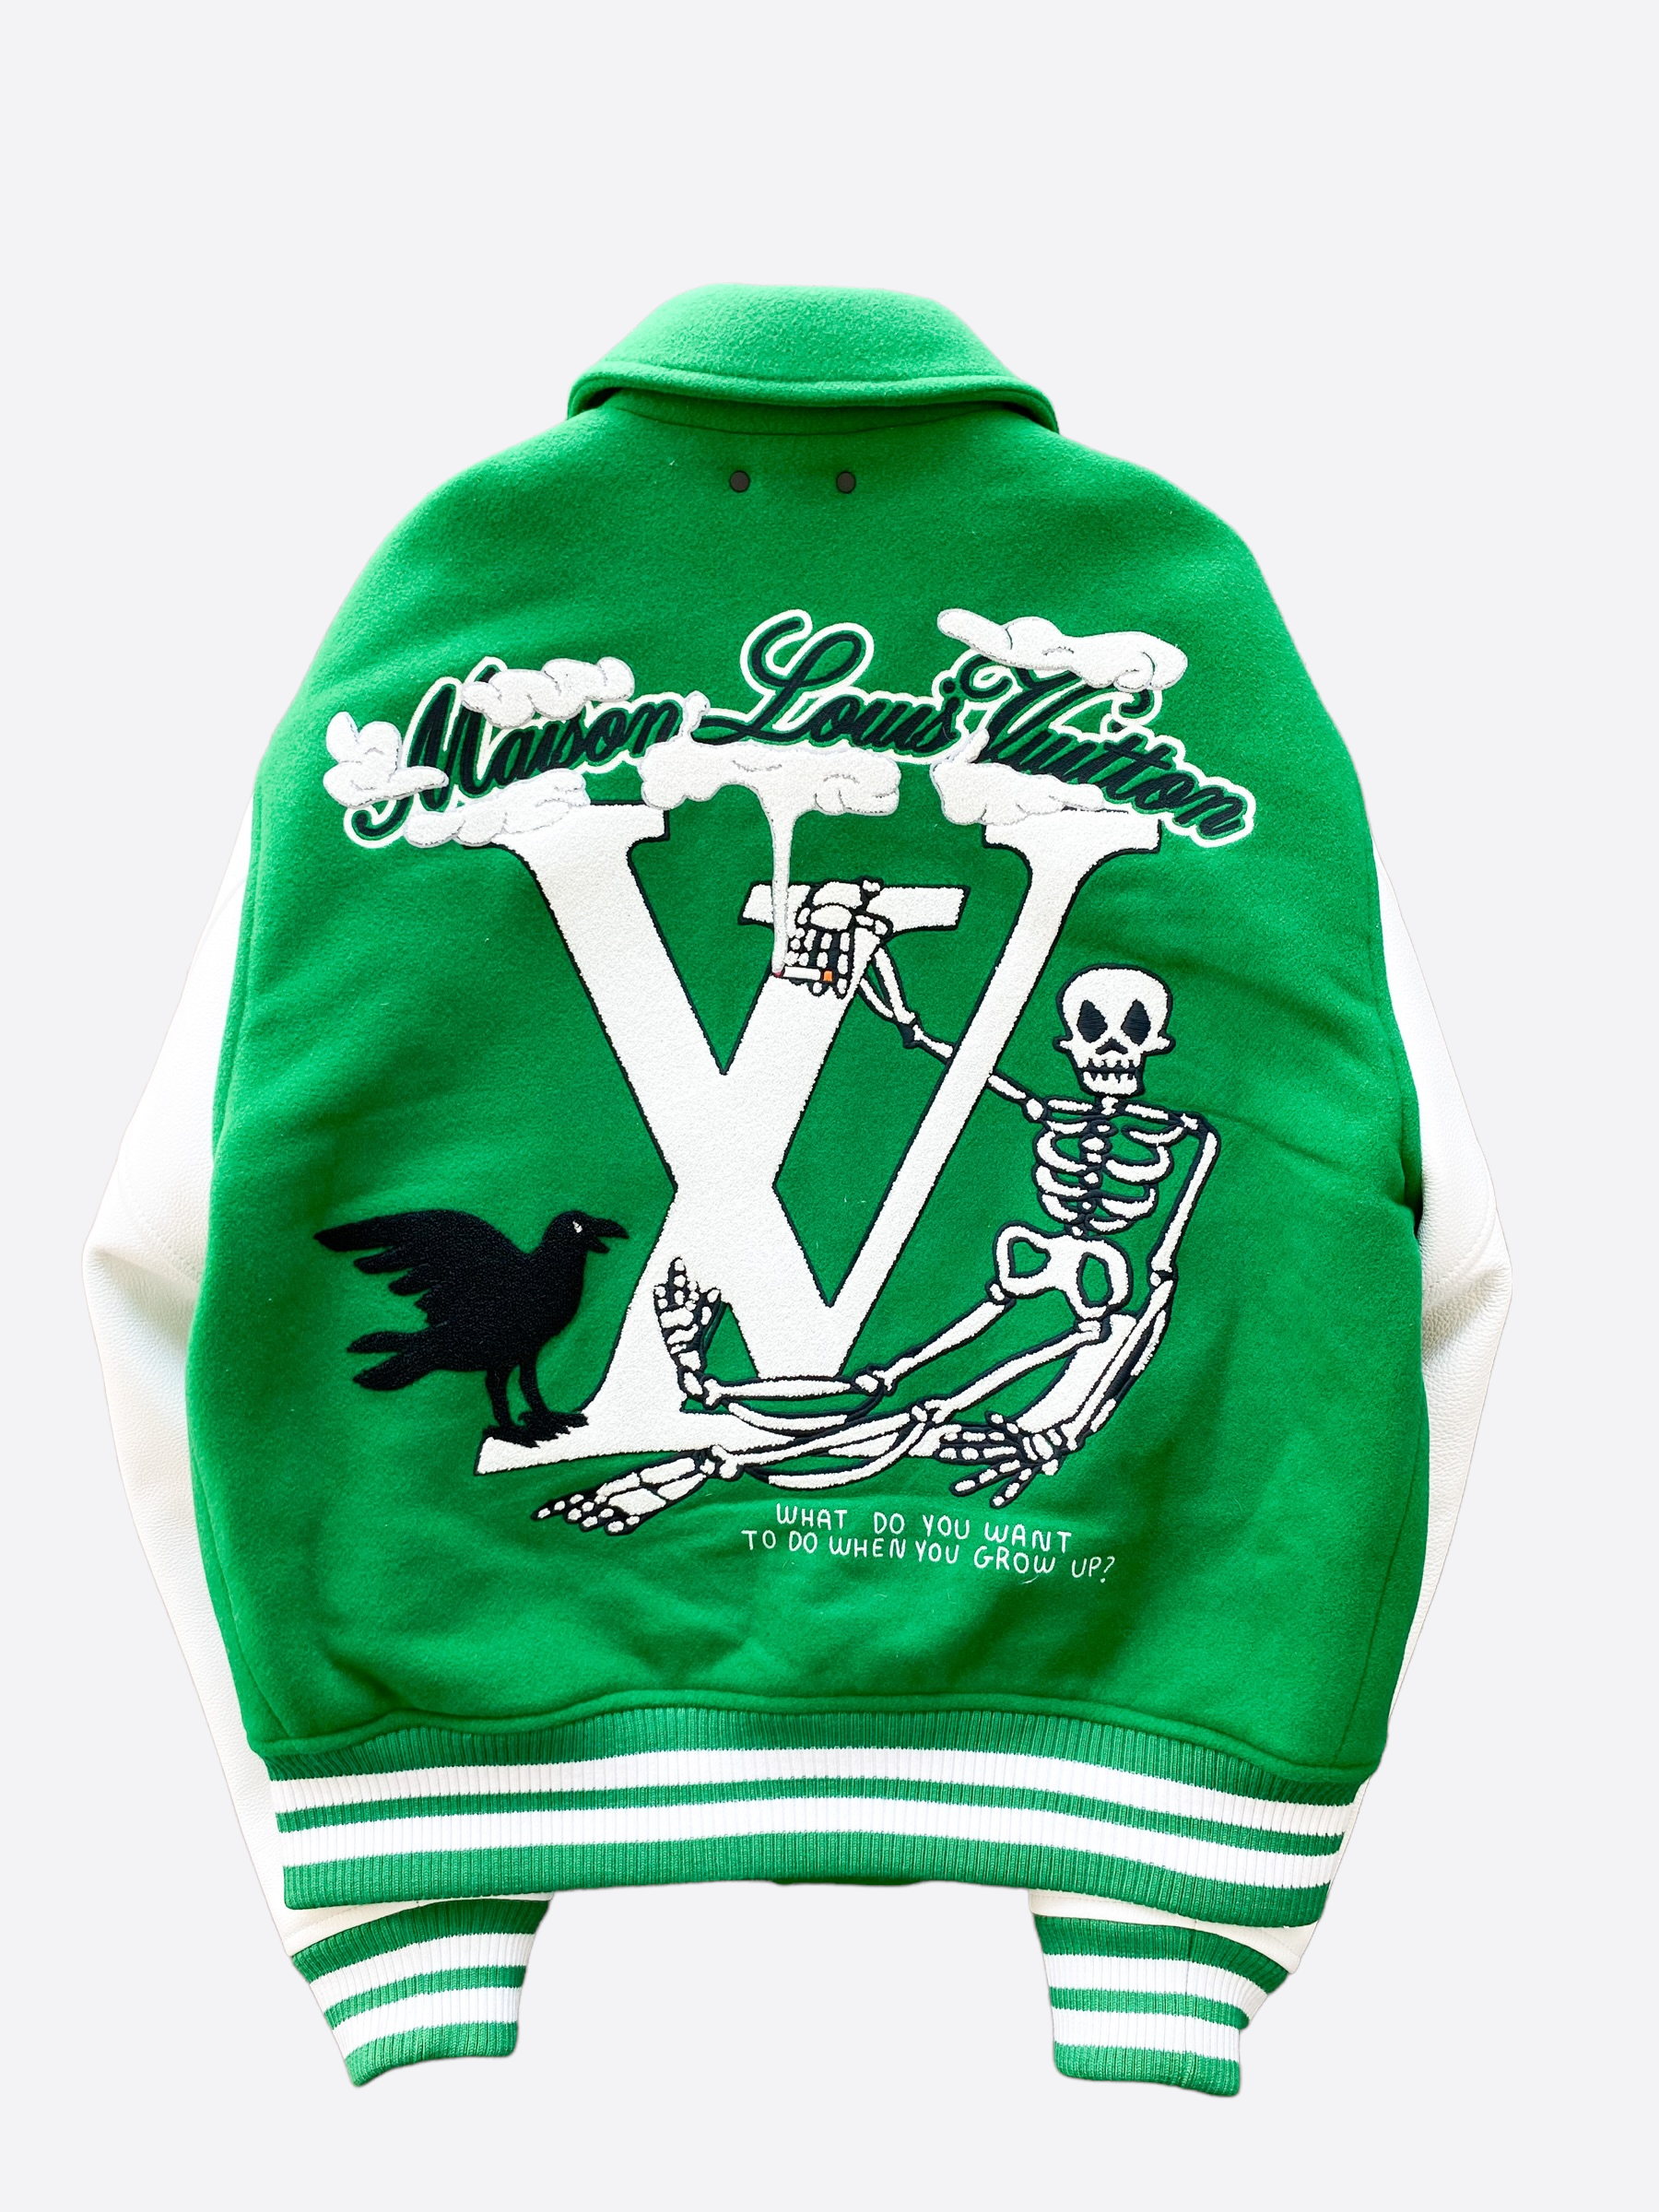 Jacket Makers Green/Red Louis Vuitton Varsity Jacket